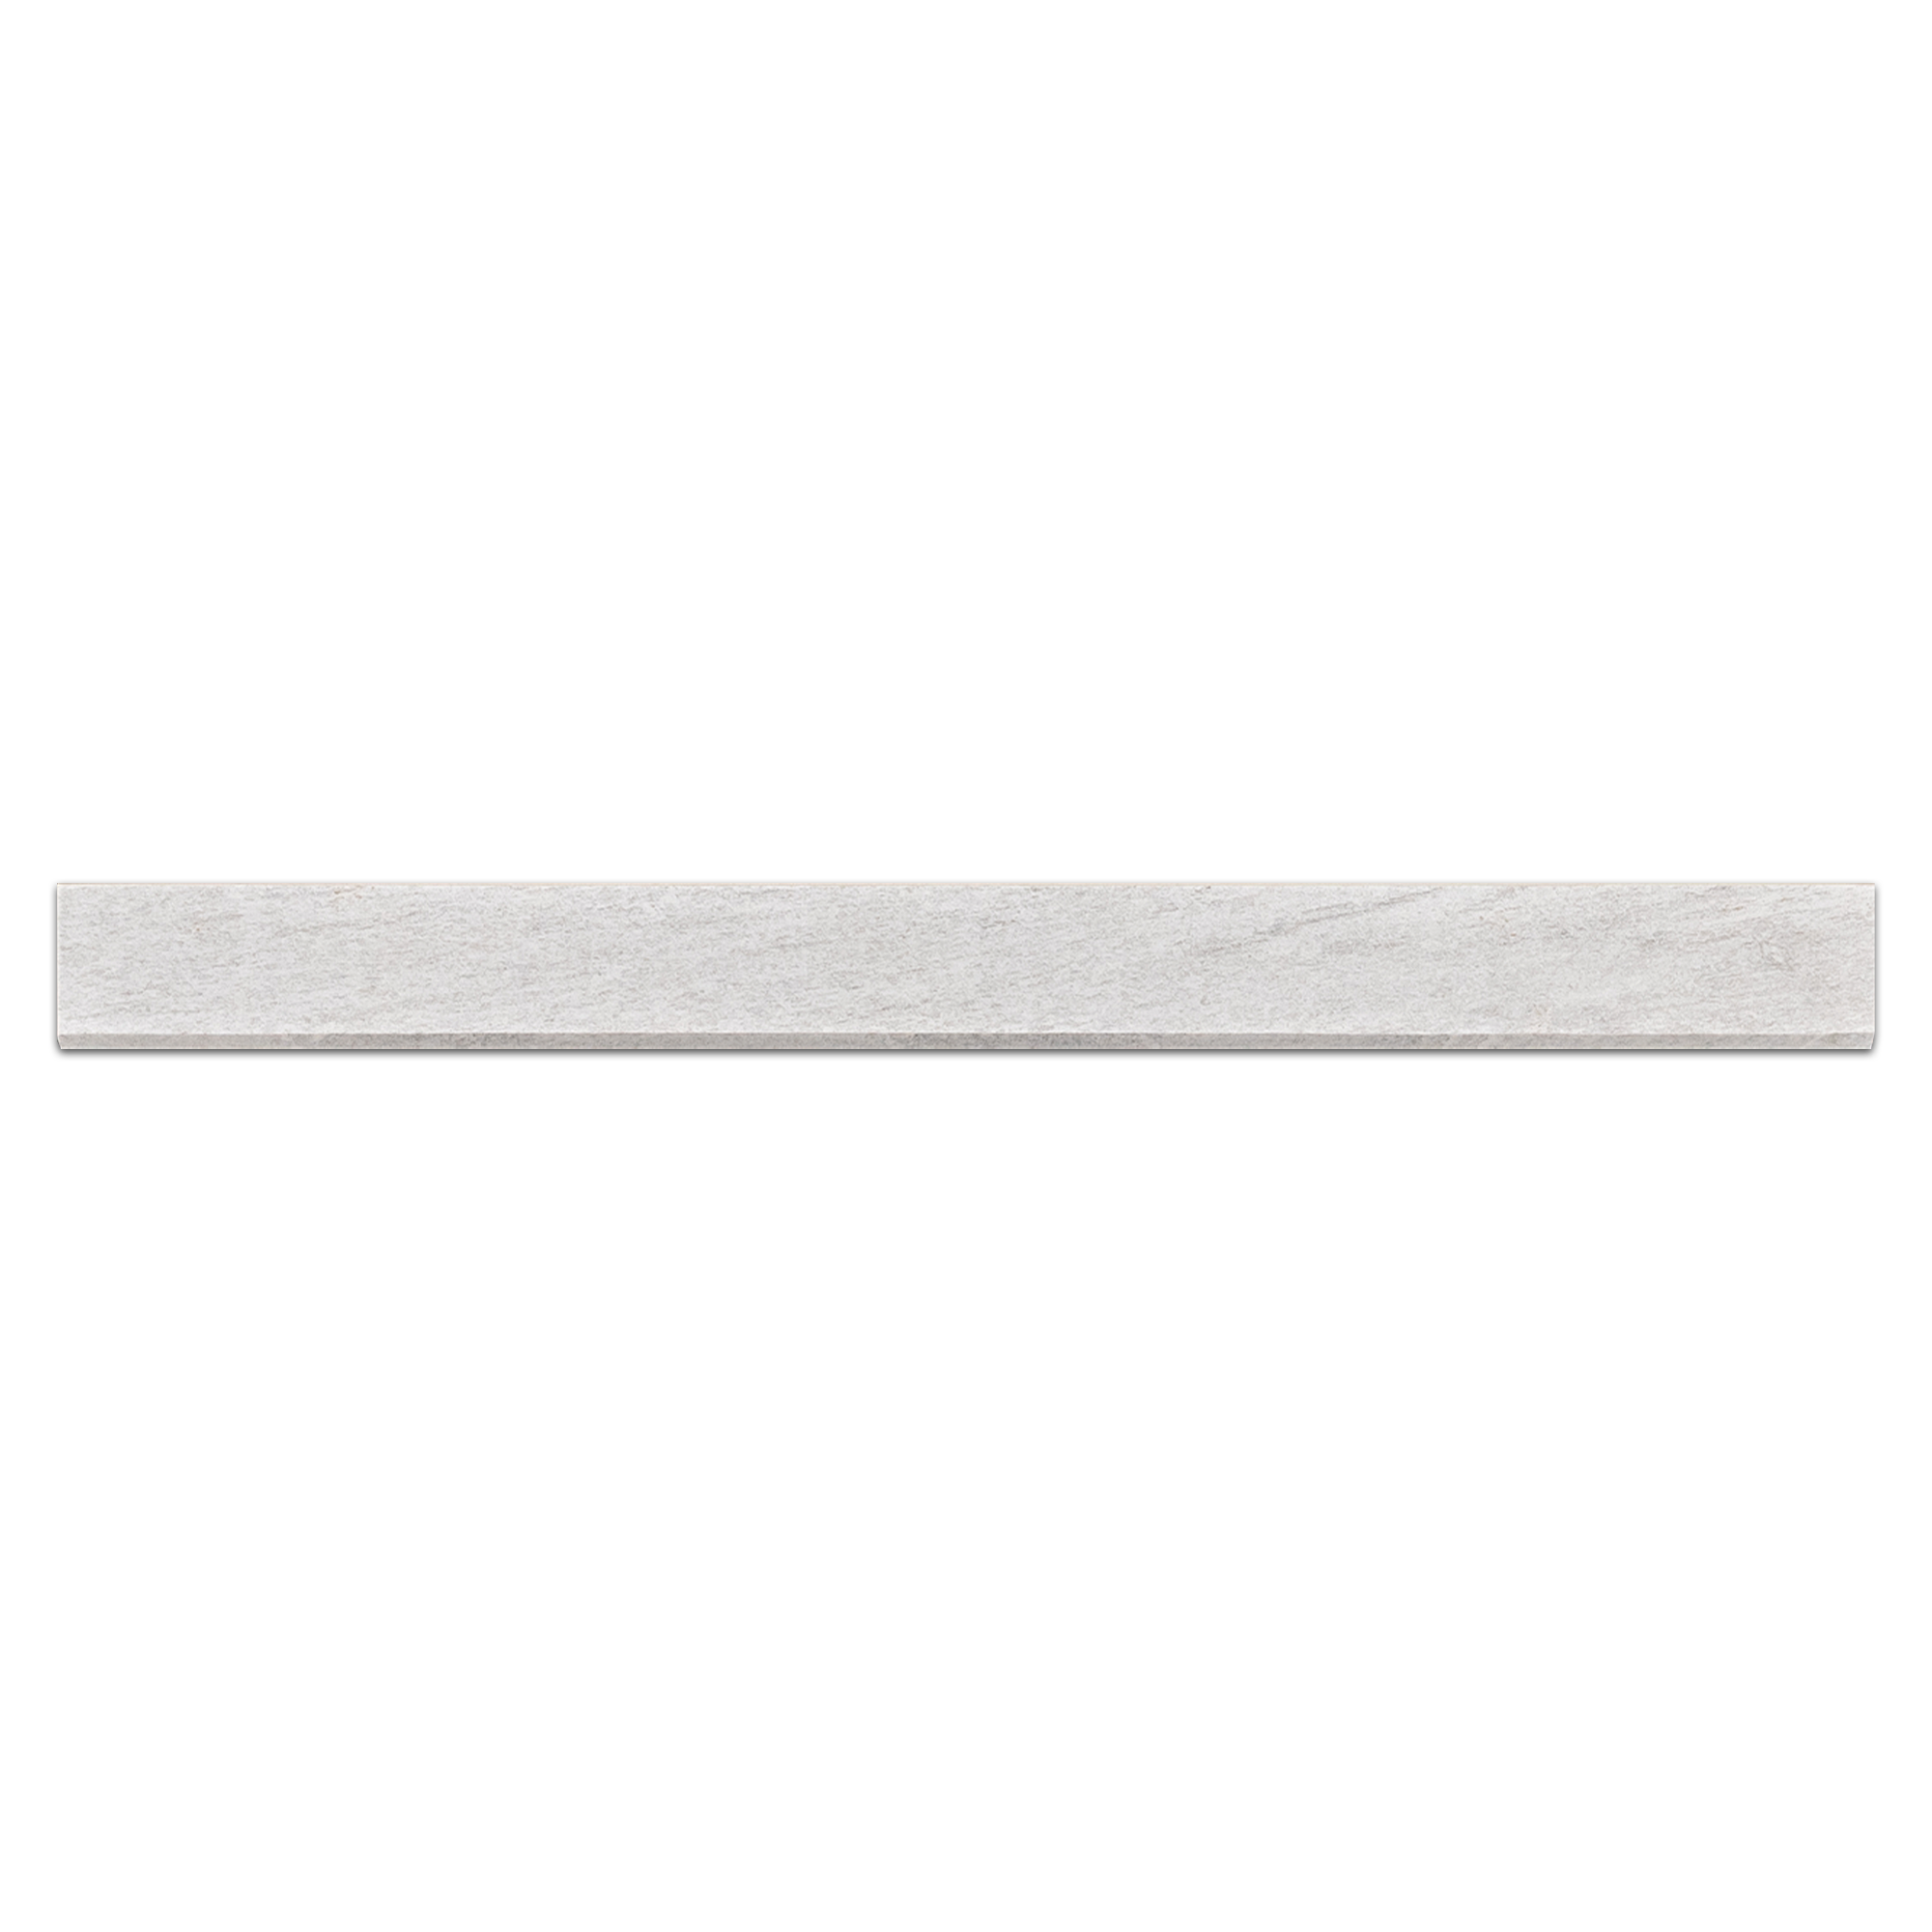 Elon Ecostone White Porcelain Bullnose 2x24 Natural SP145 Surface Group International Product